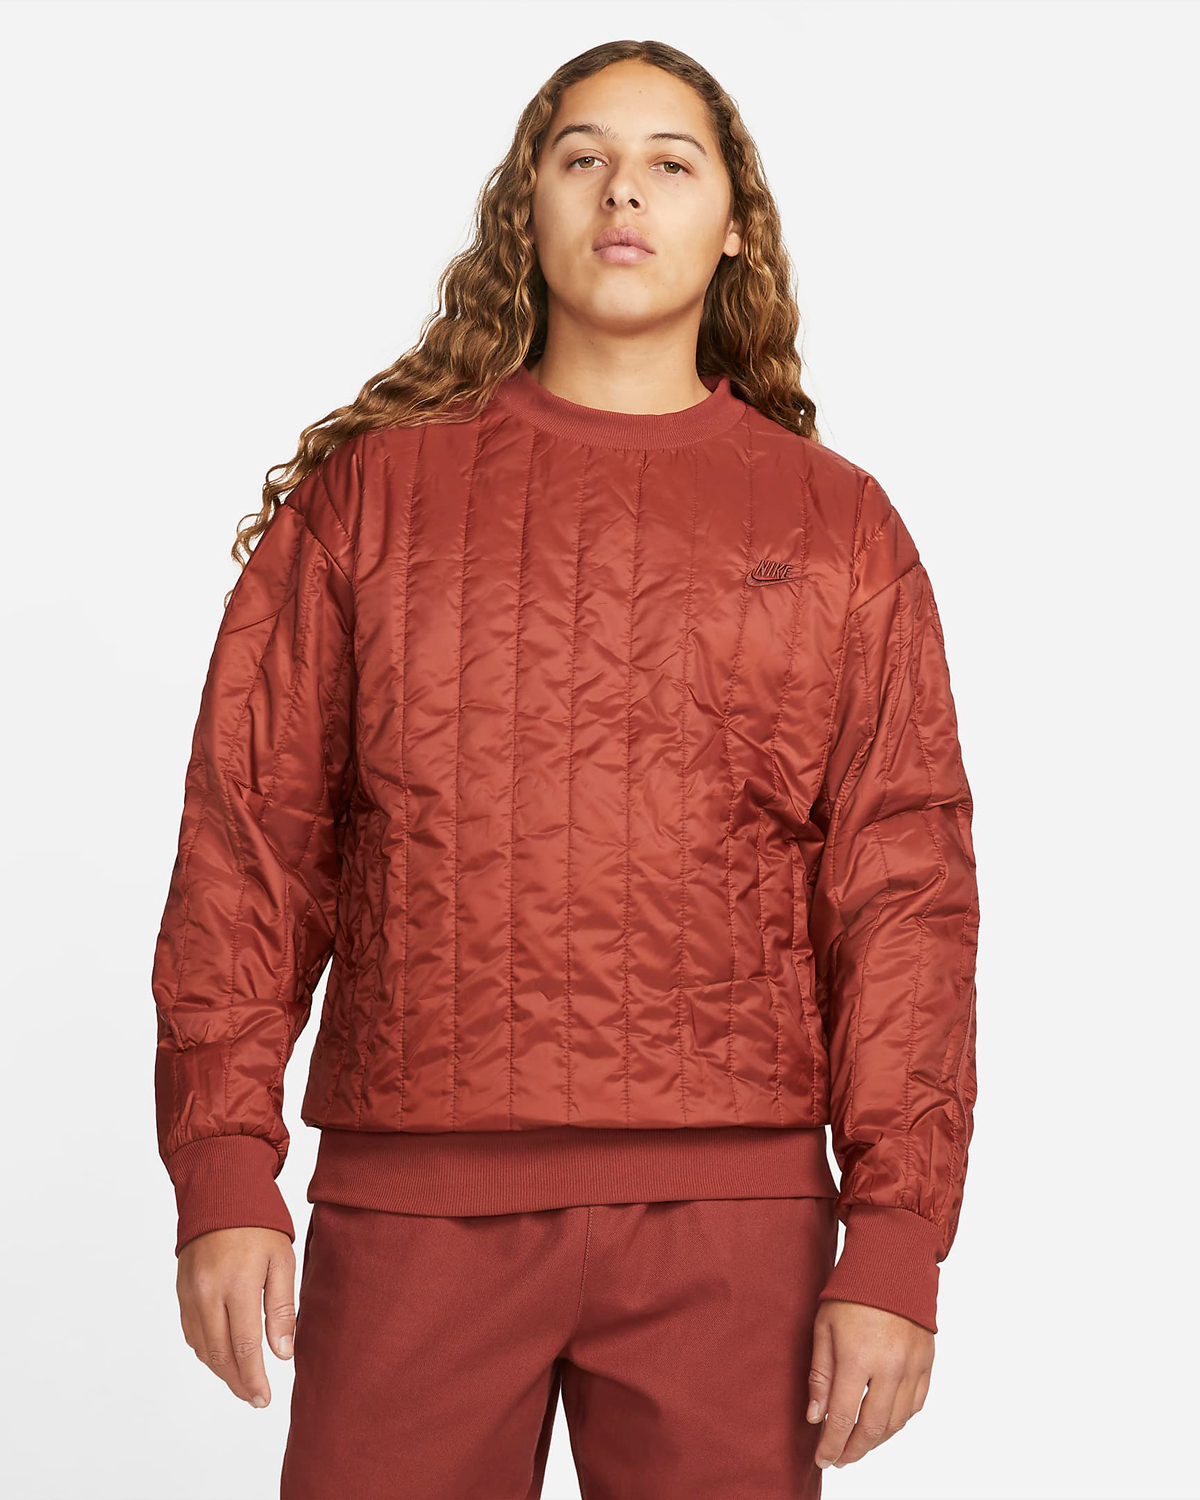 Nike-Mars-Stone-Tech-Pack-Winterized-Crew-Sweatshirt